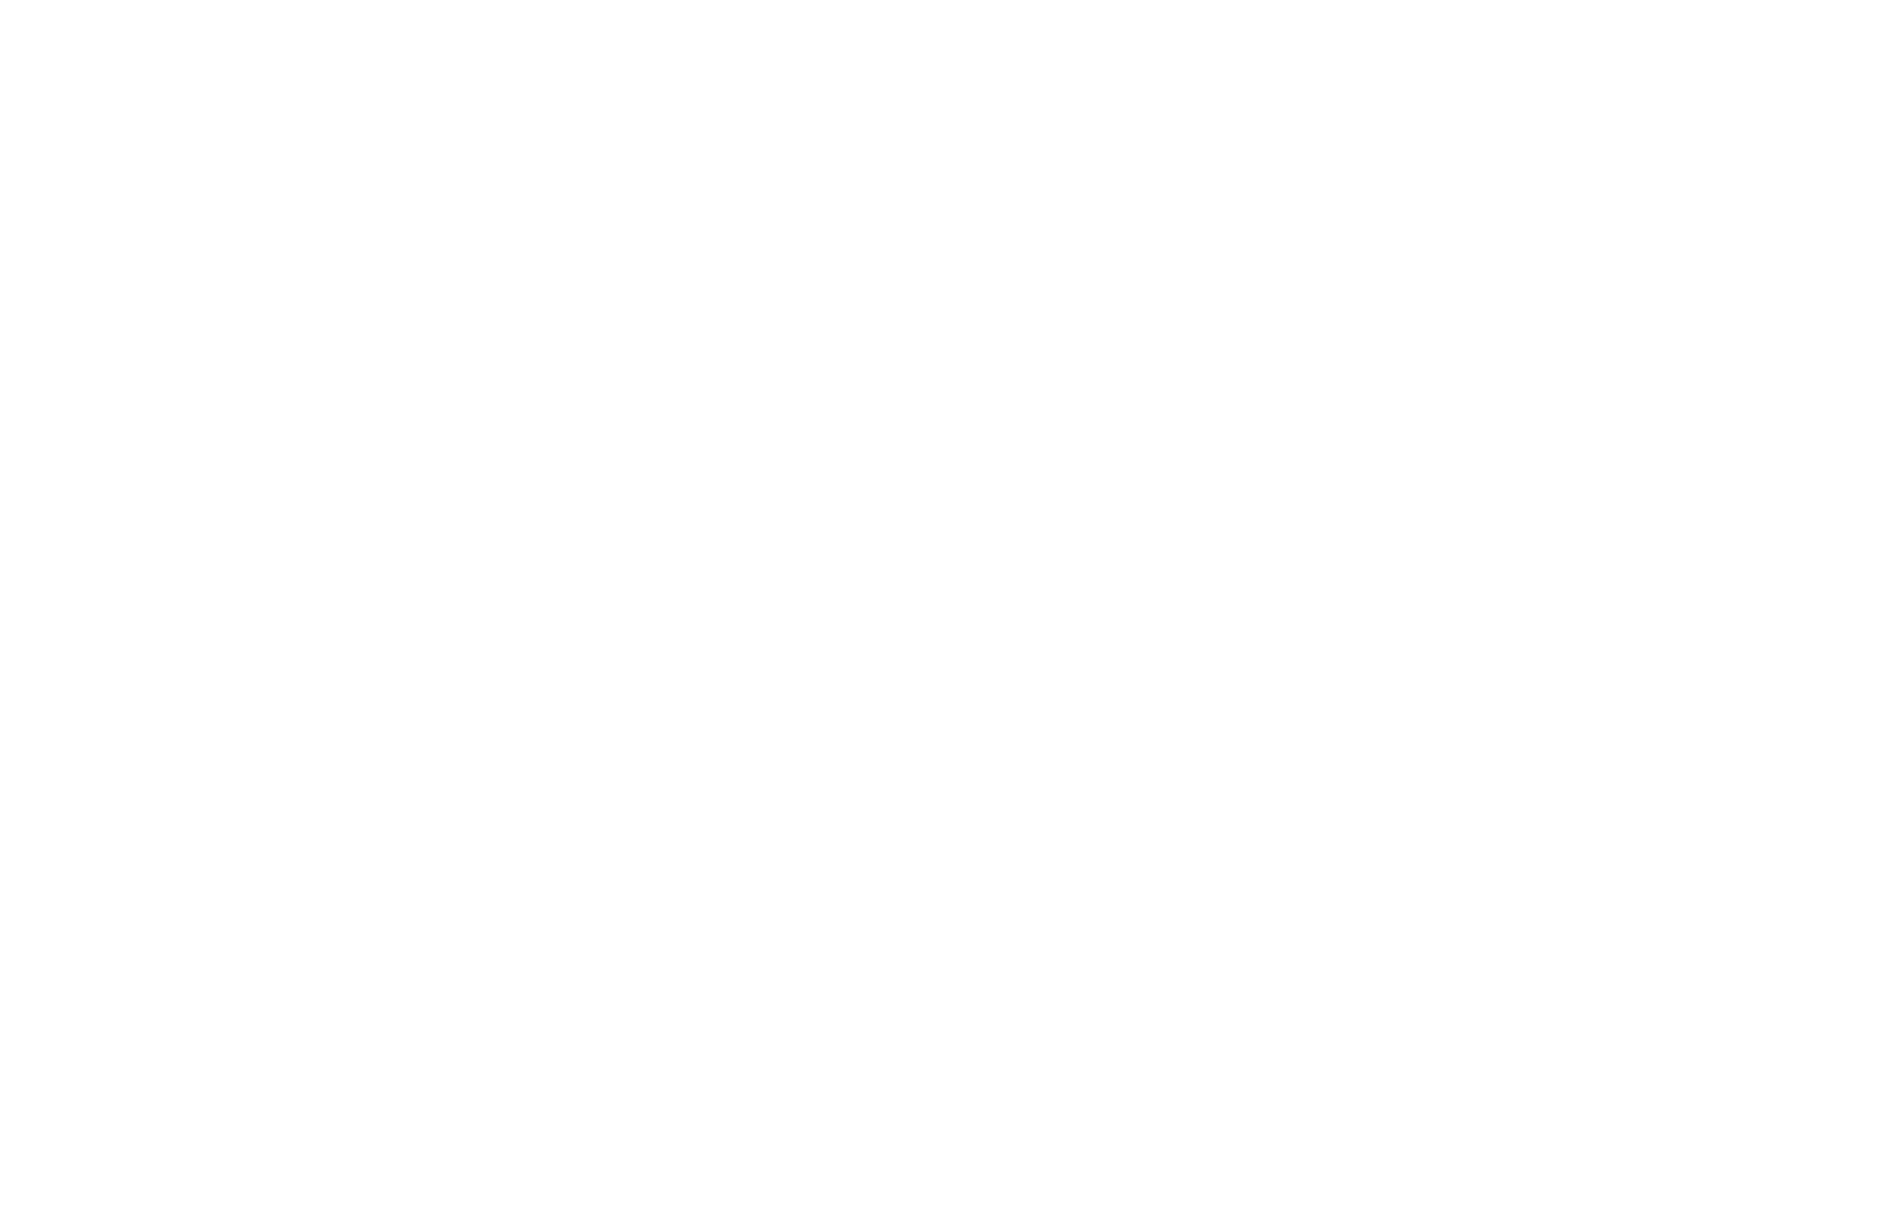 Affordable Car Logo - Car repairs by Harv's Auto Repairs in Taunton | For affordable car ...